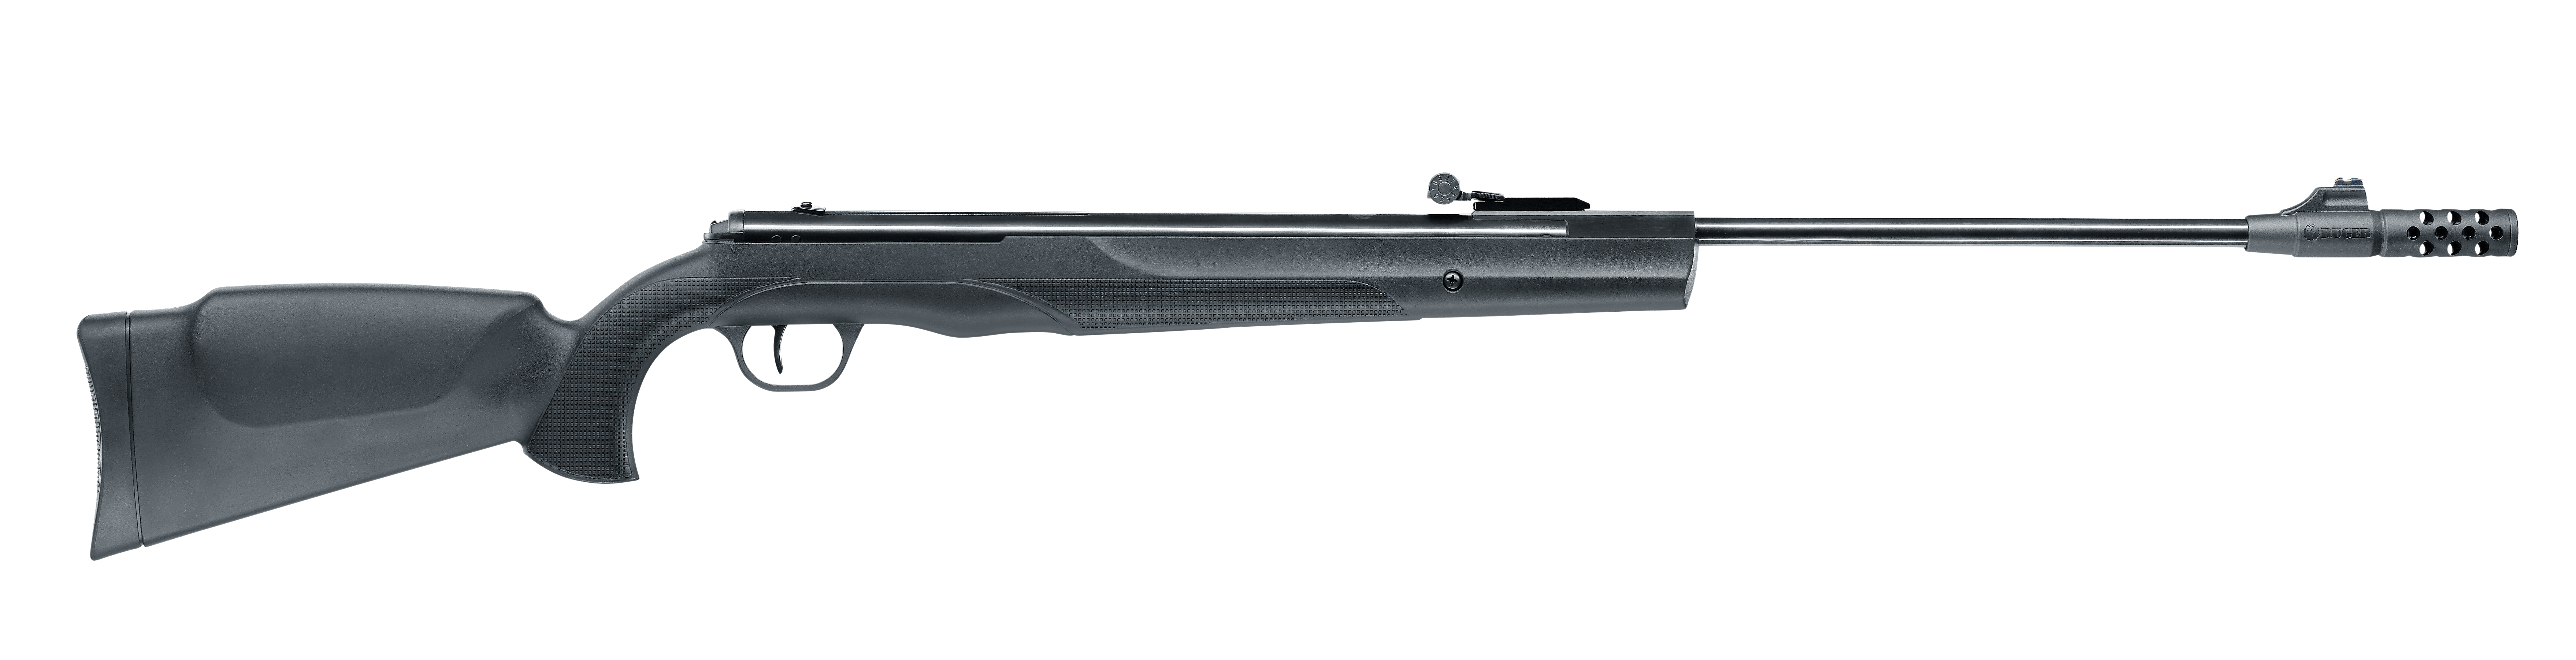 RUGER (Umarex) Spring Operated Airgun Air Scout Magnum